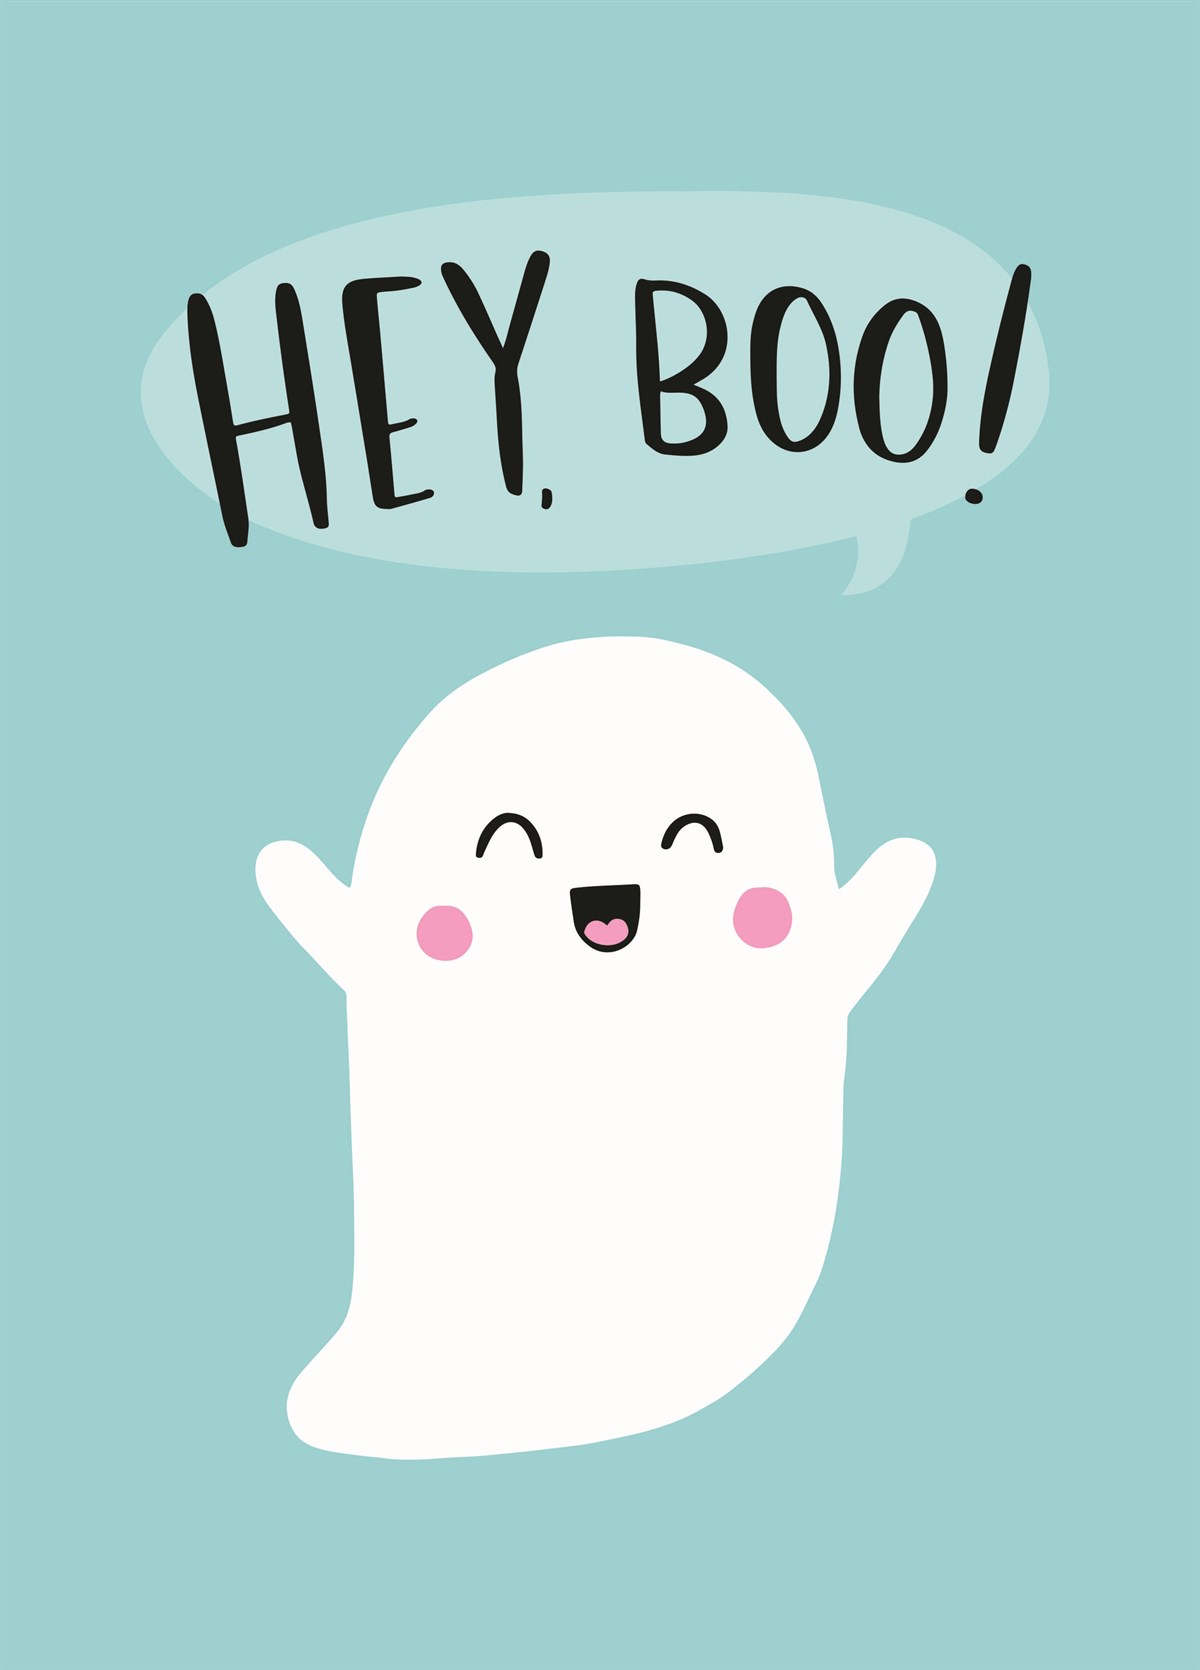 Hey Boo! Halloween? Why not send&am...